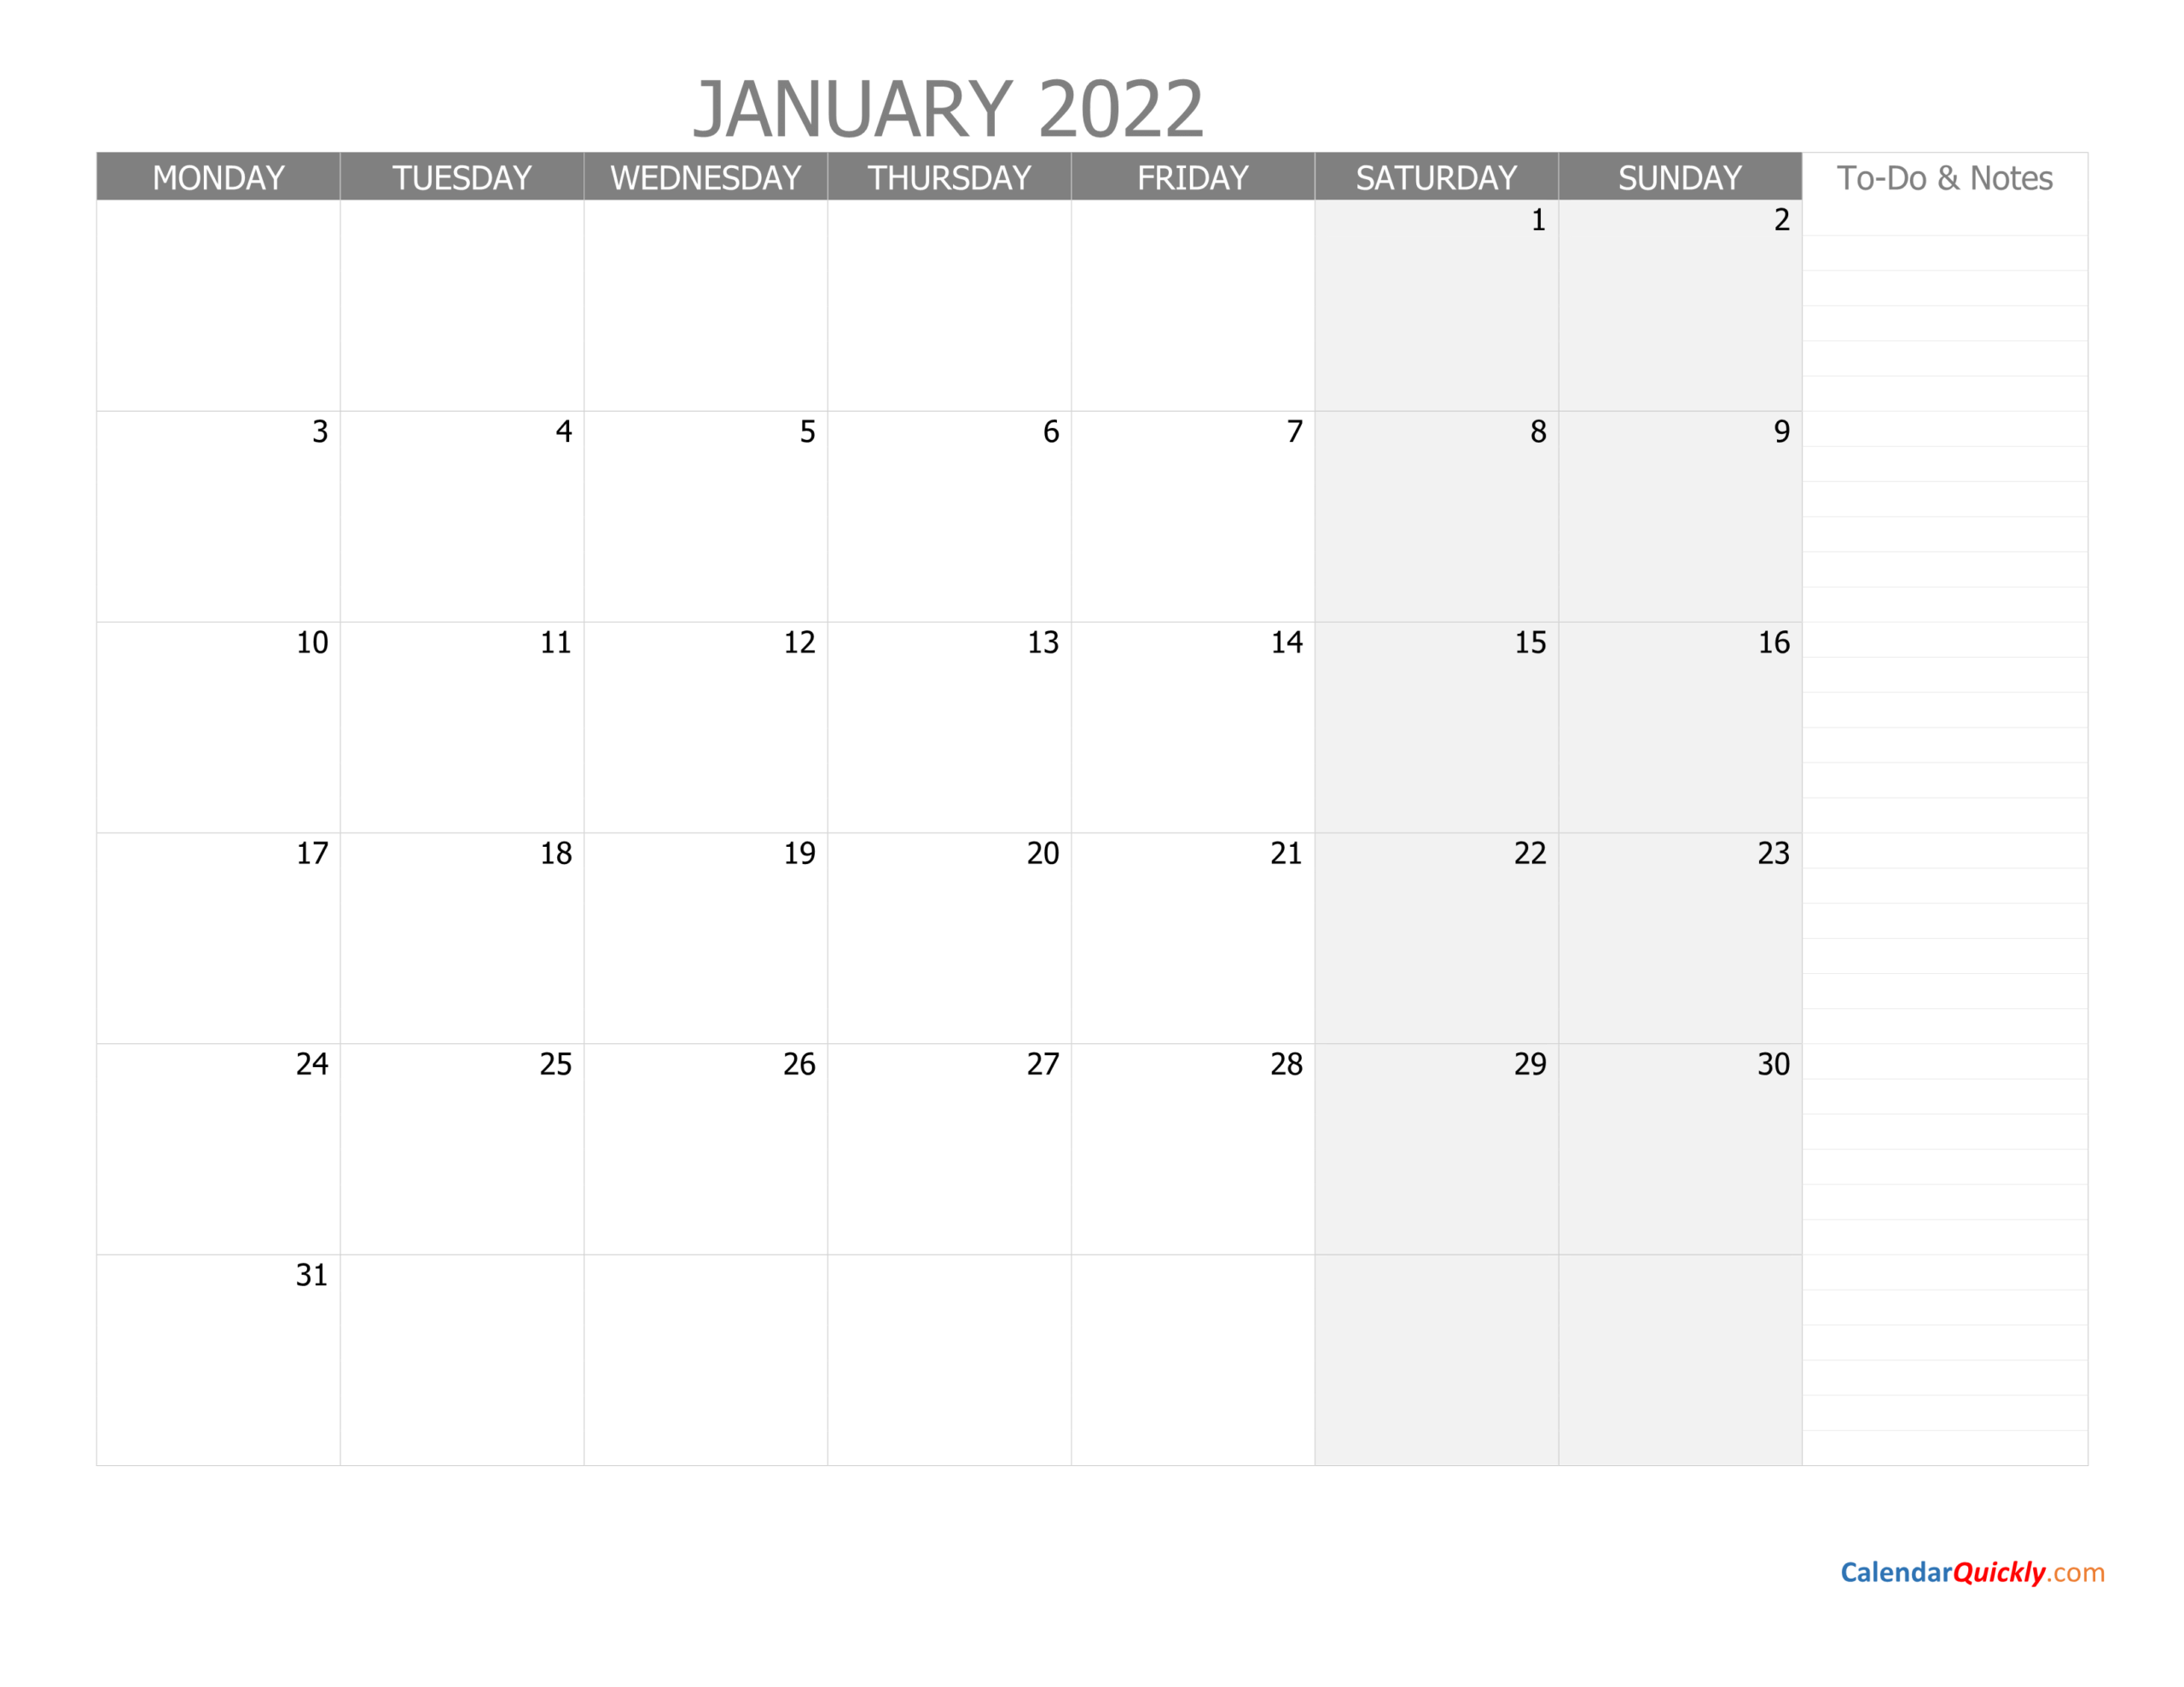 January Monday Calendar 2022 With Notes | Calendar Quickly  Free Printable Calendar 2022 With Notes